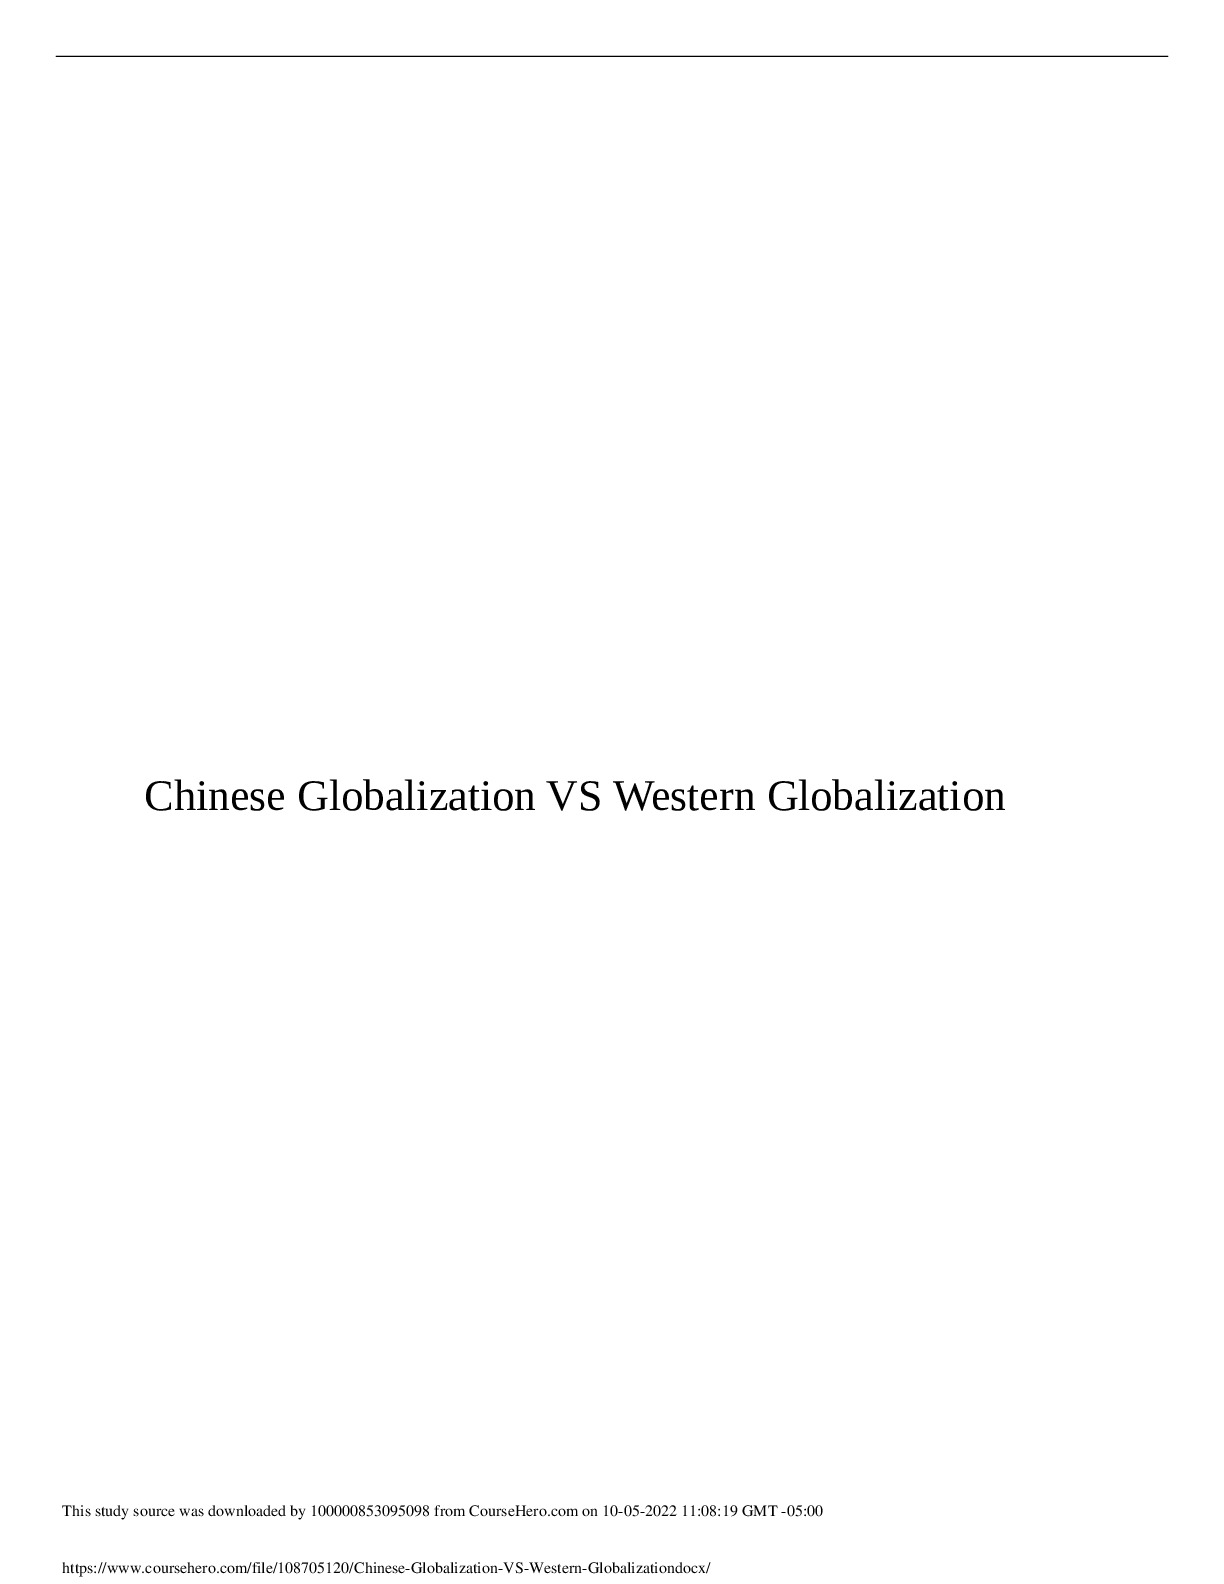 Chinese_Globalization_VS_Western_Globalization.docx